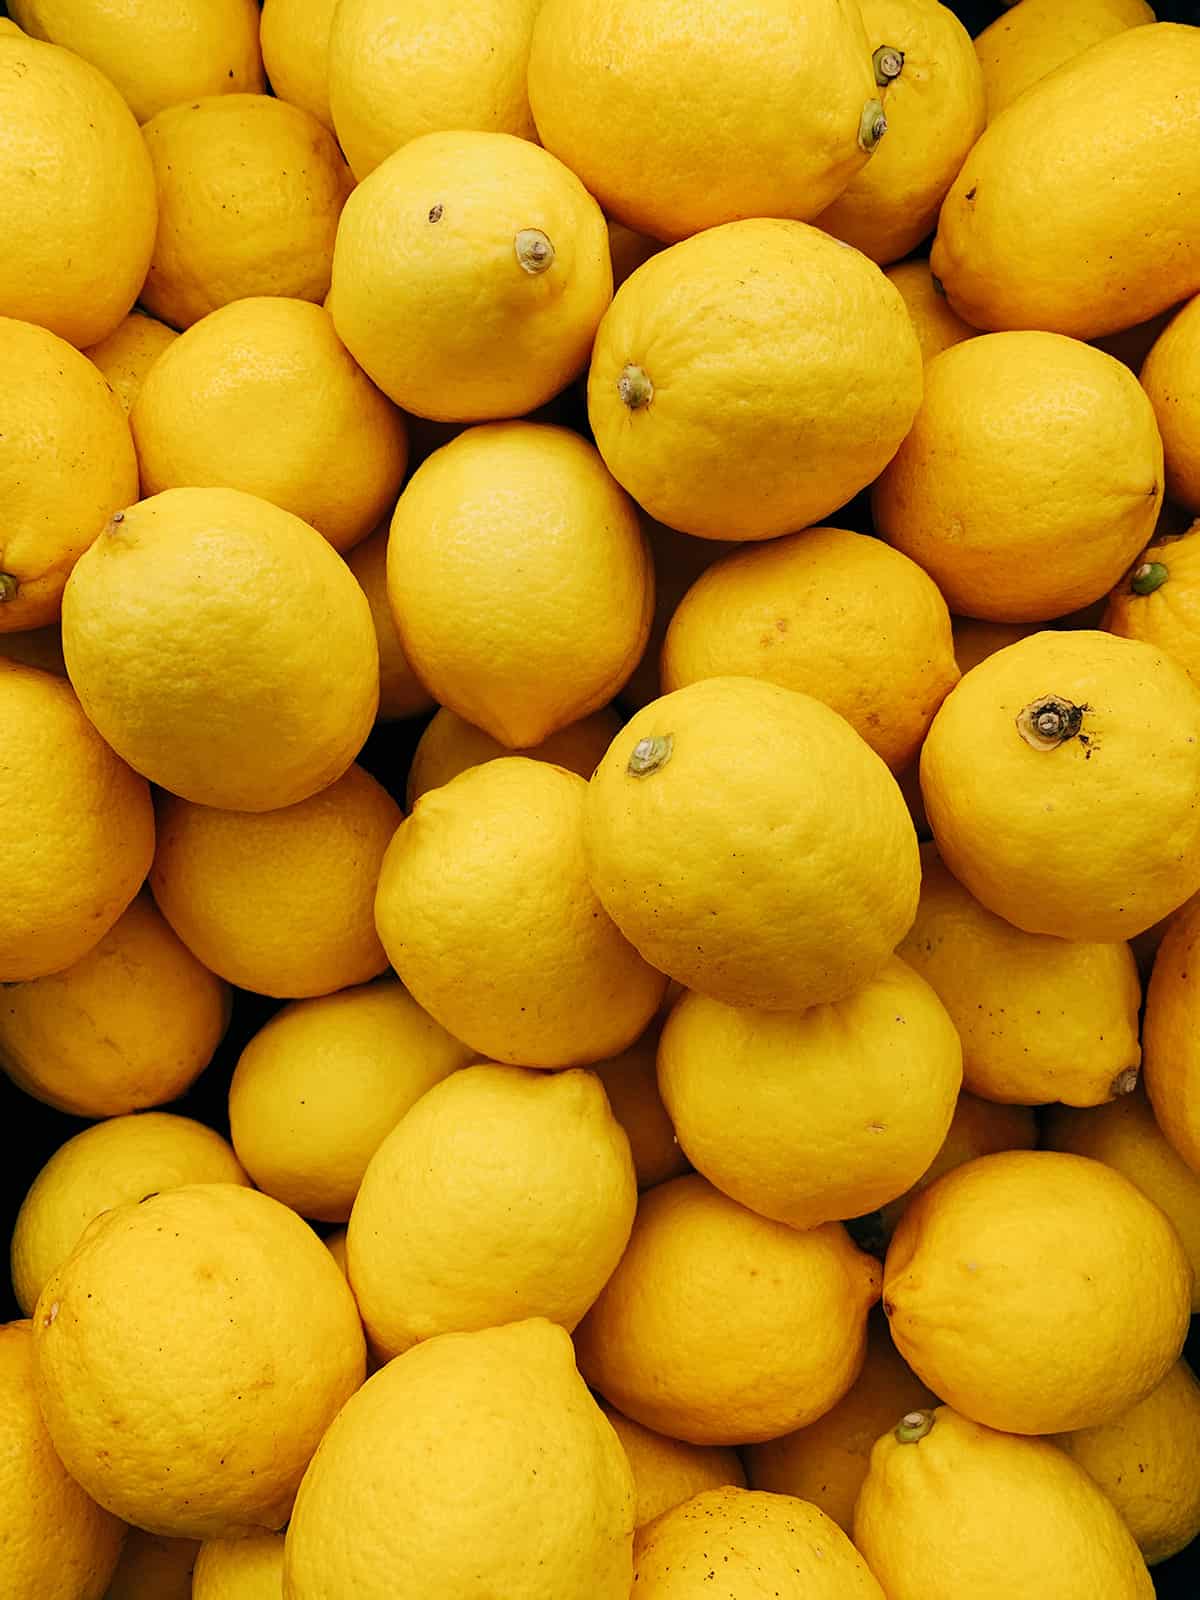 Dozens of lemons stacked together.